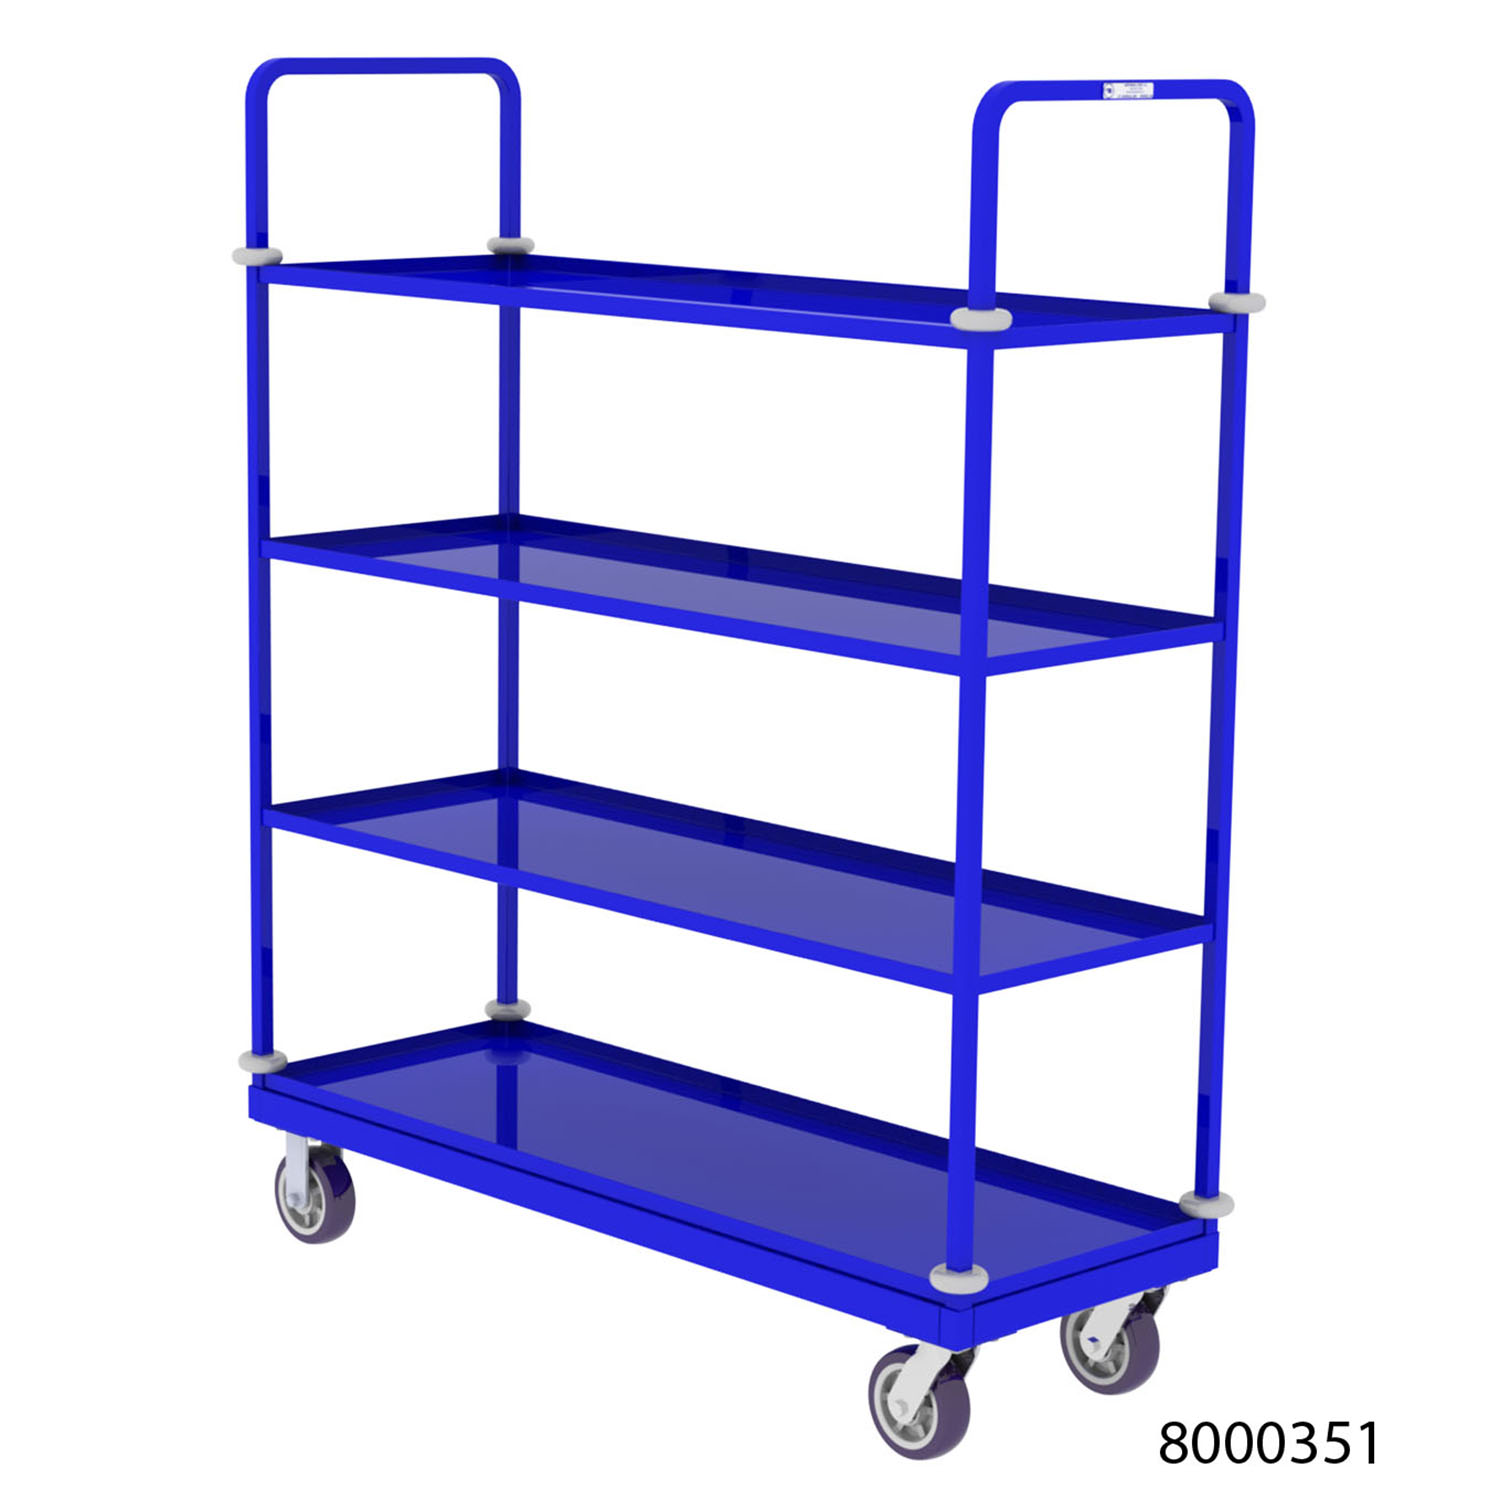 4 shelf INDUSTRIAL CARTS picking cart material handling stock cart